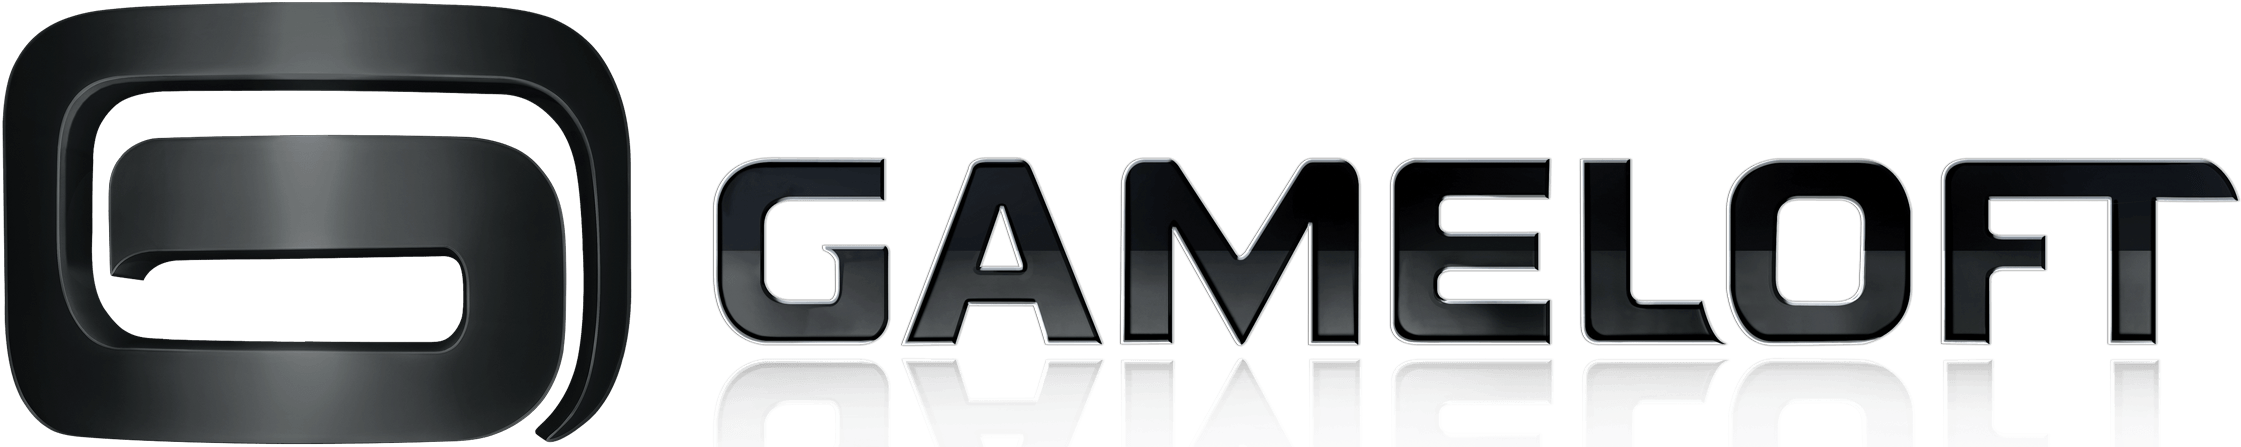 Gameloft Logo - Gameloft Logo And Wordmark.png